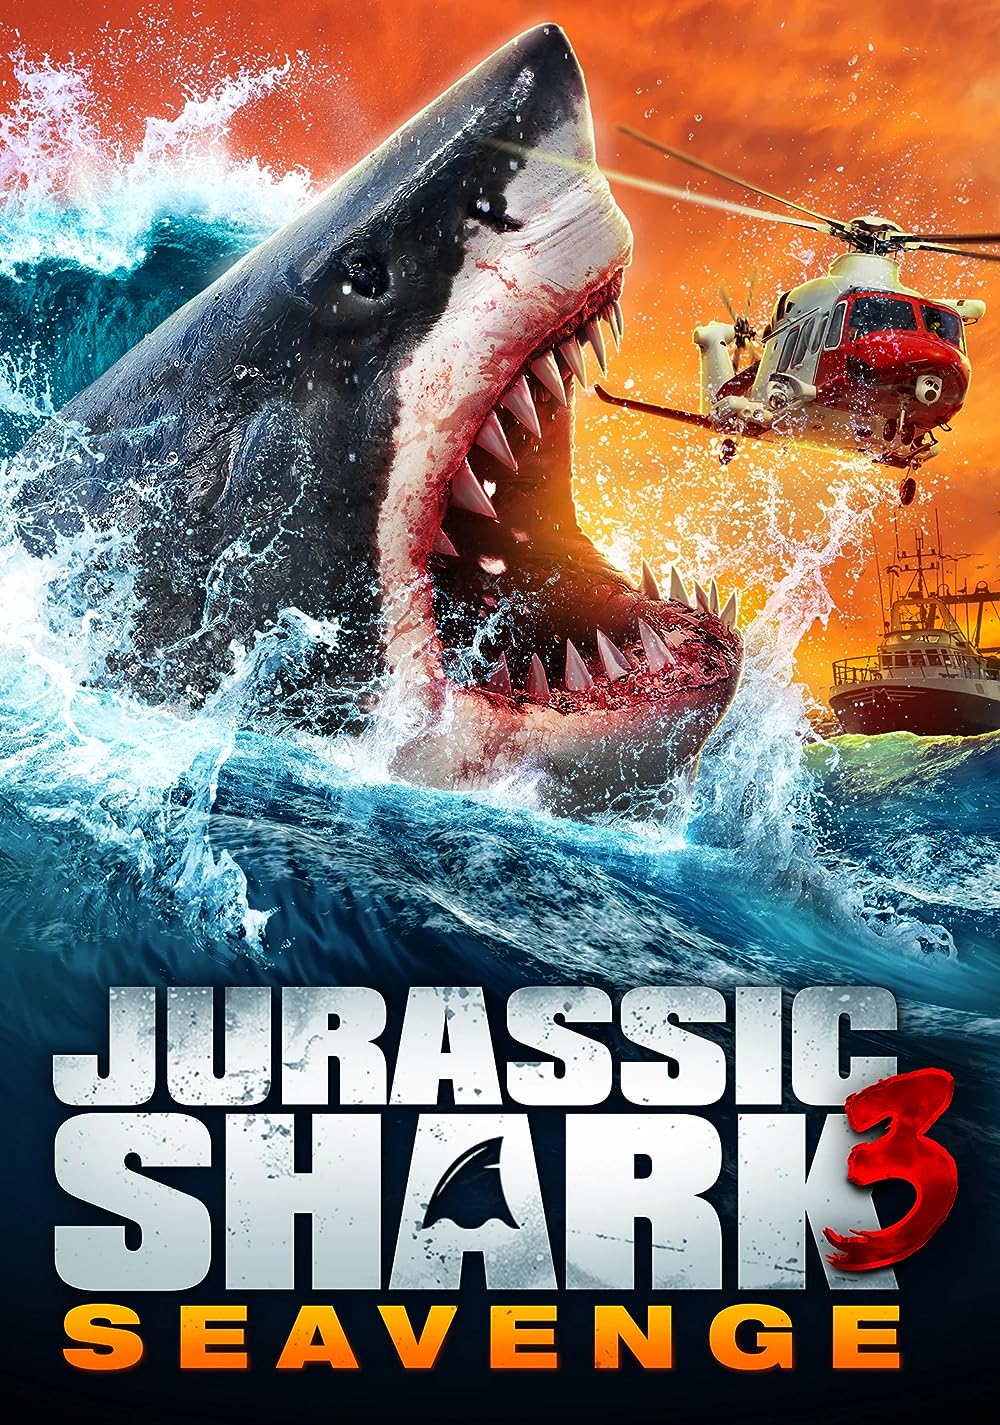 Jurassic Shark 3 Seavenge 2023 English 1080p-720p-480p HDRip ESub Download